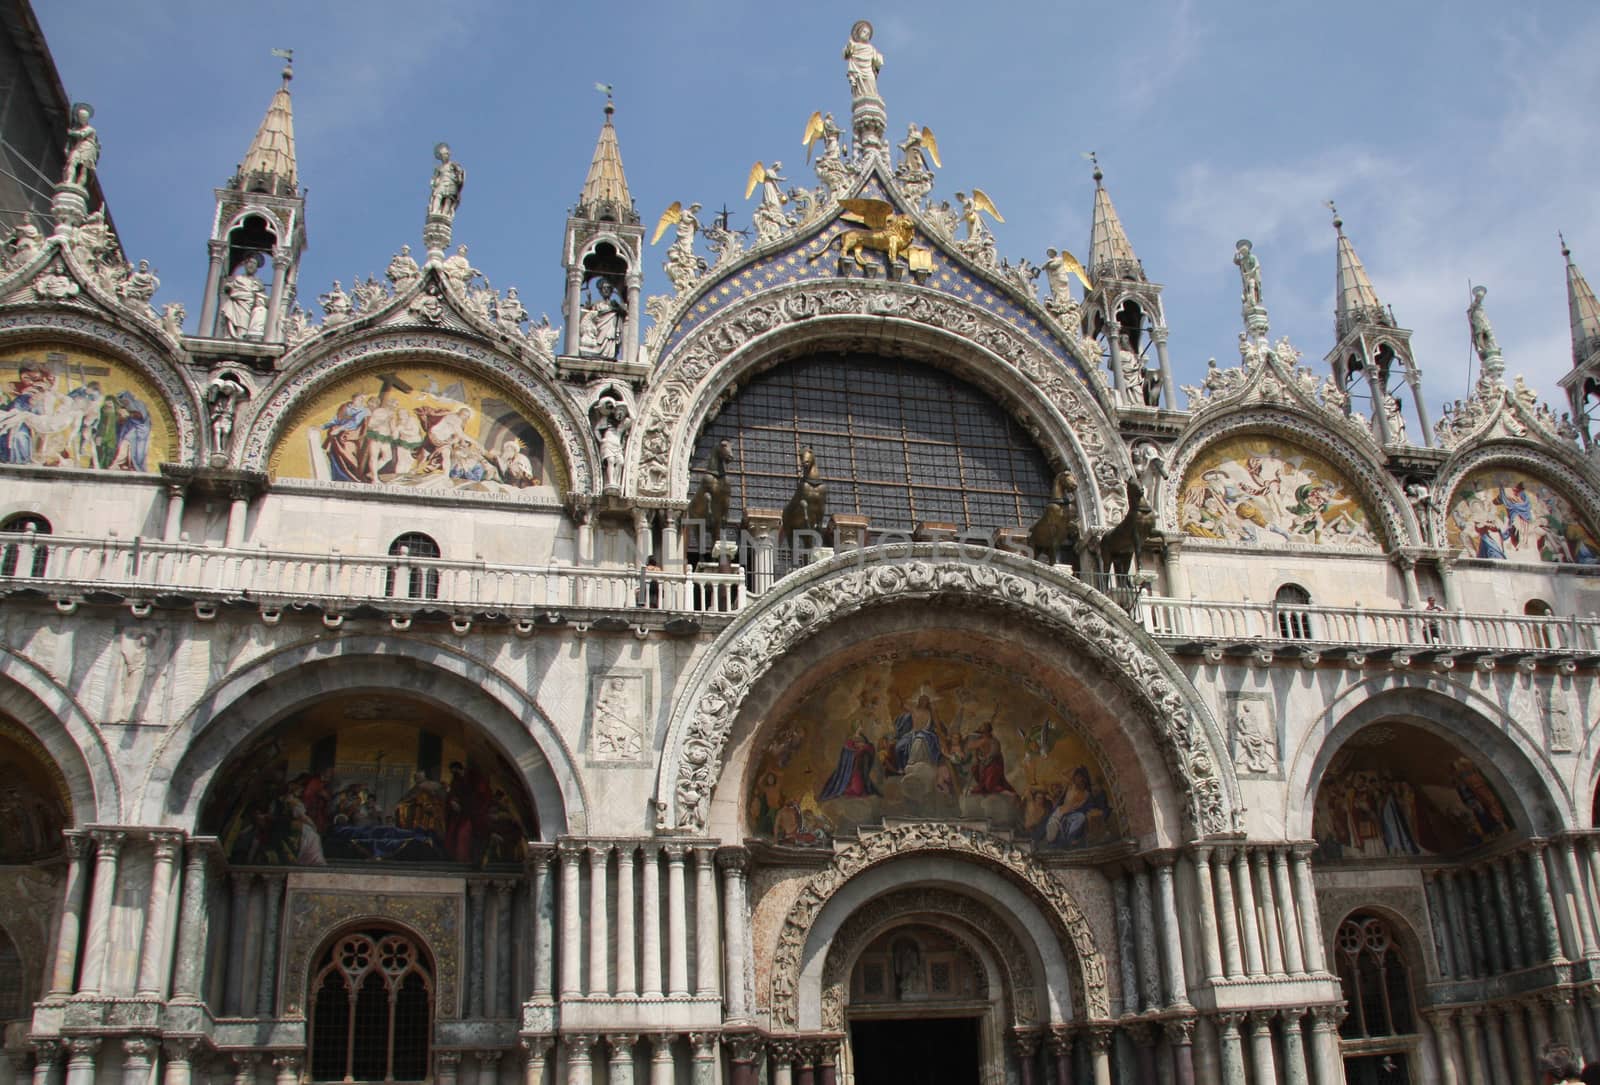 Saint Mark's Basilica facade in Venice by fotoecho